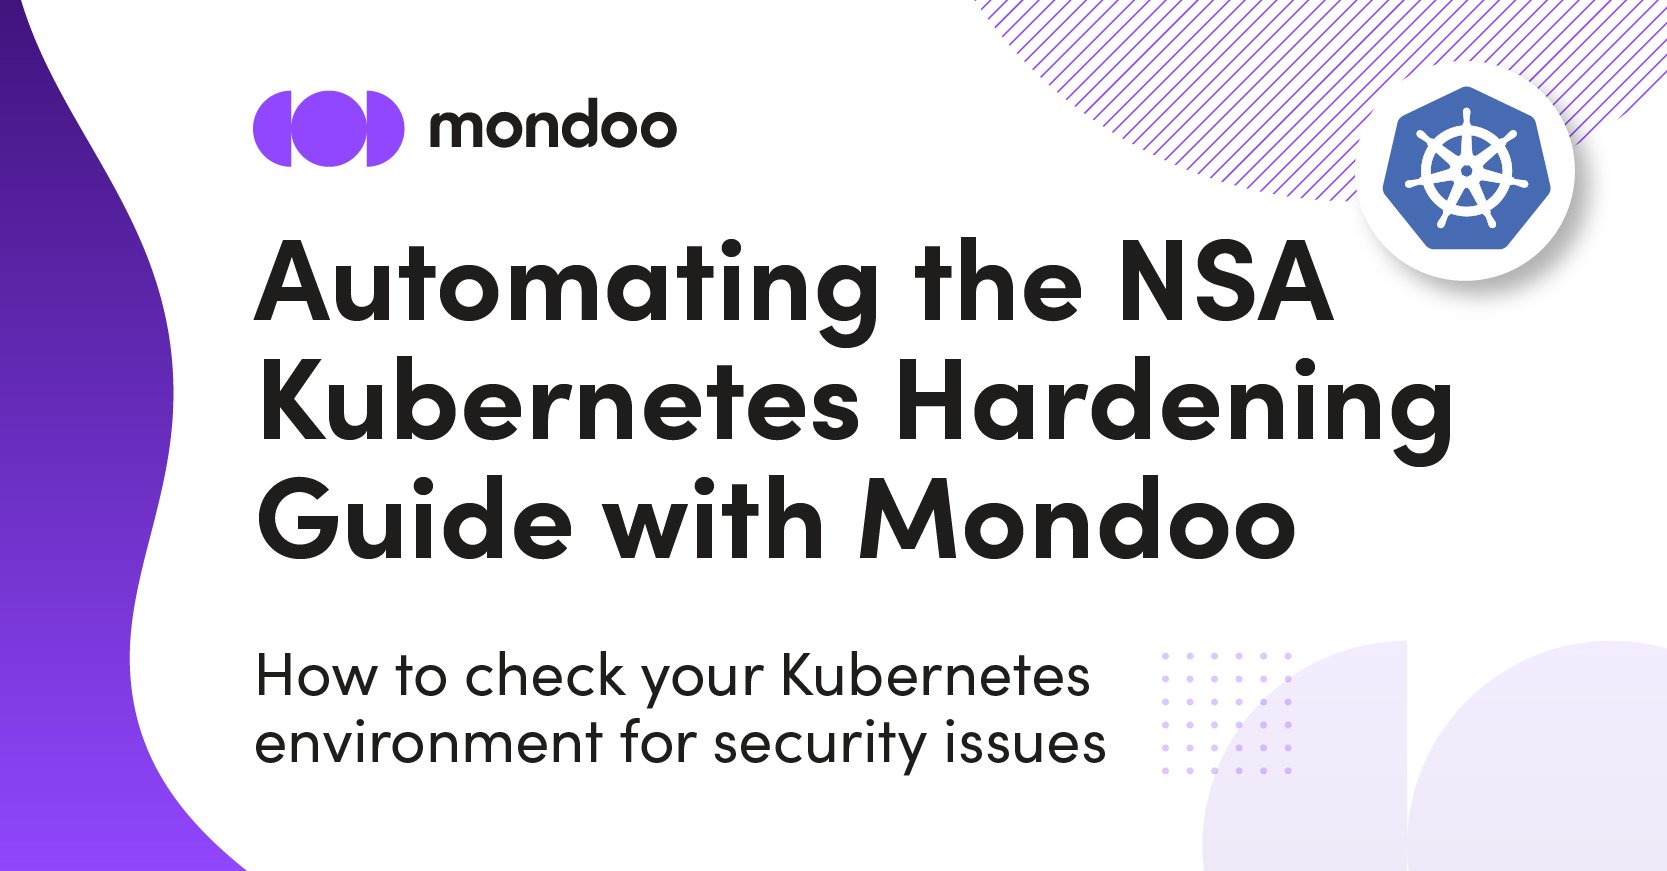 Mondoo_graphics_Automating the NSA Kubernetes Hardening Guide-02